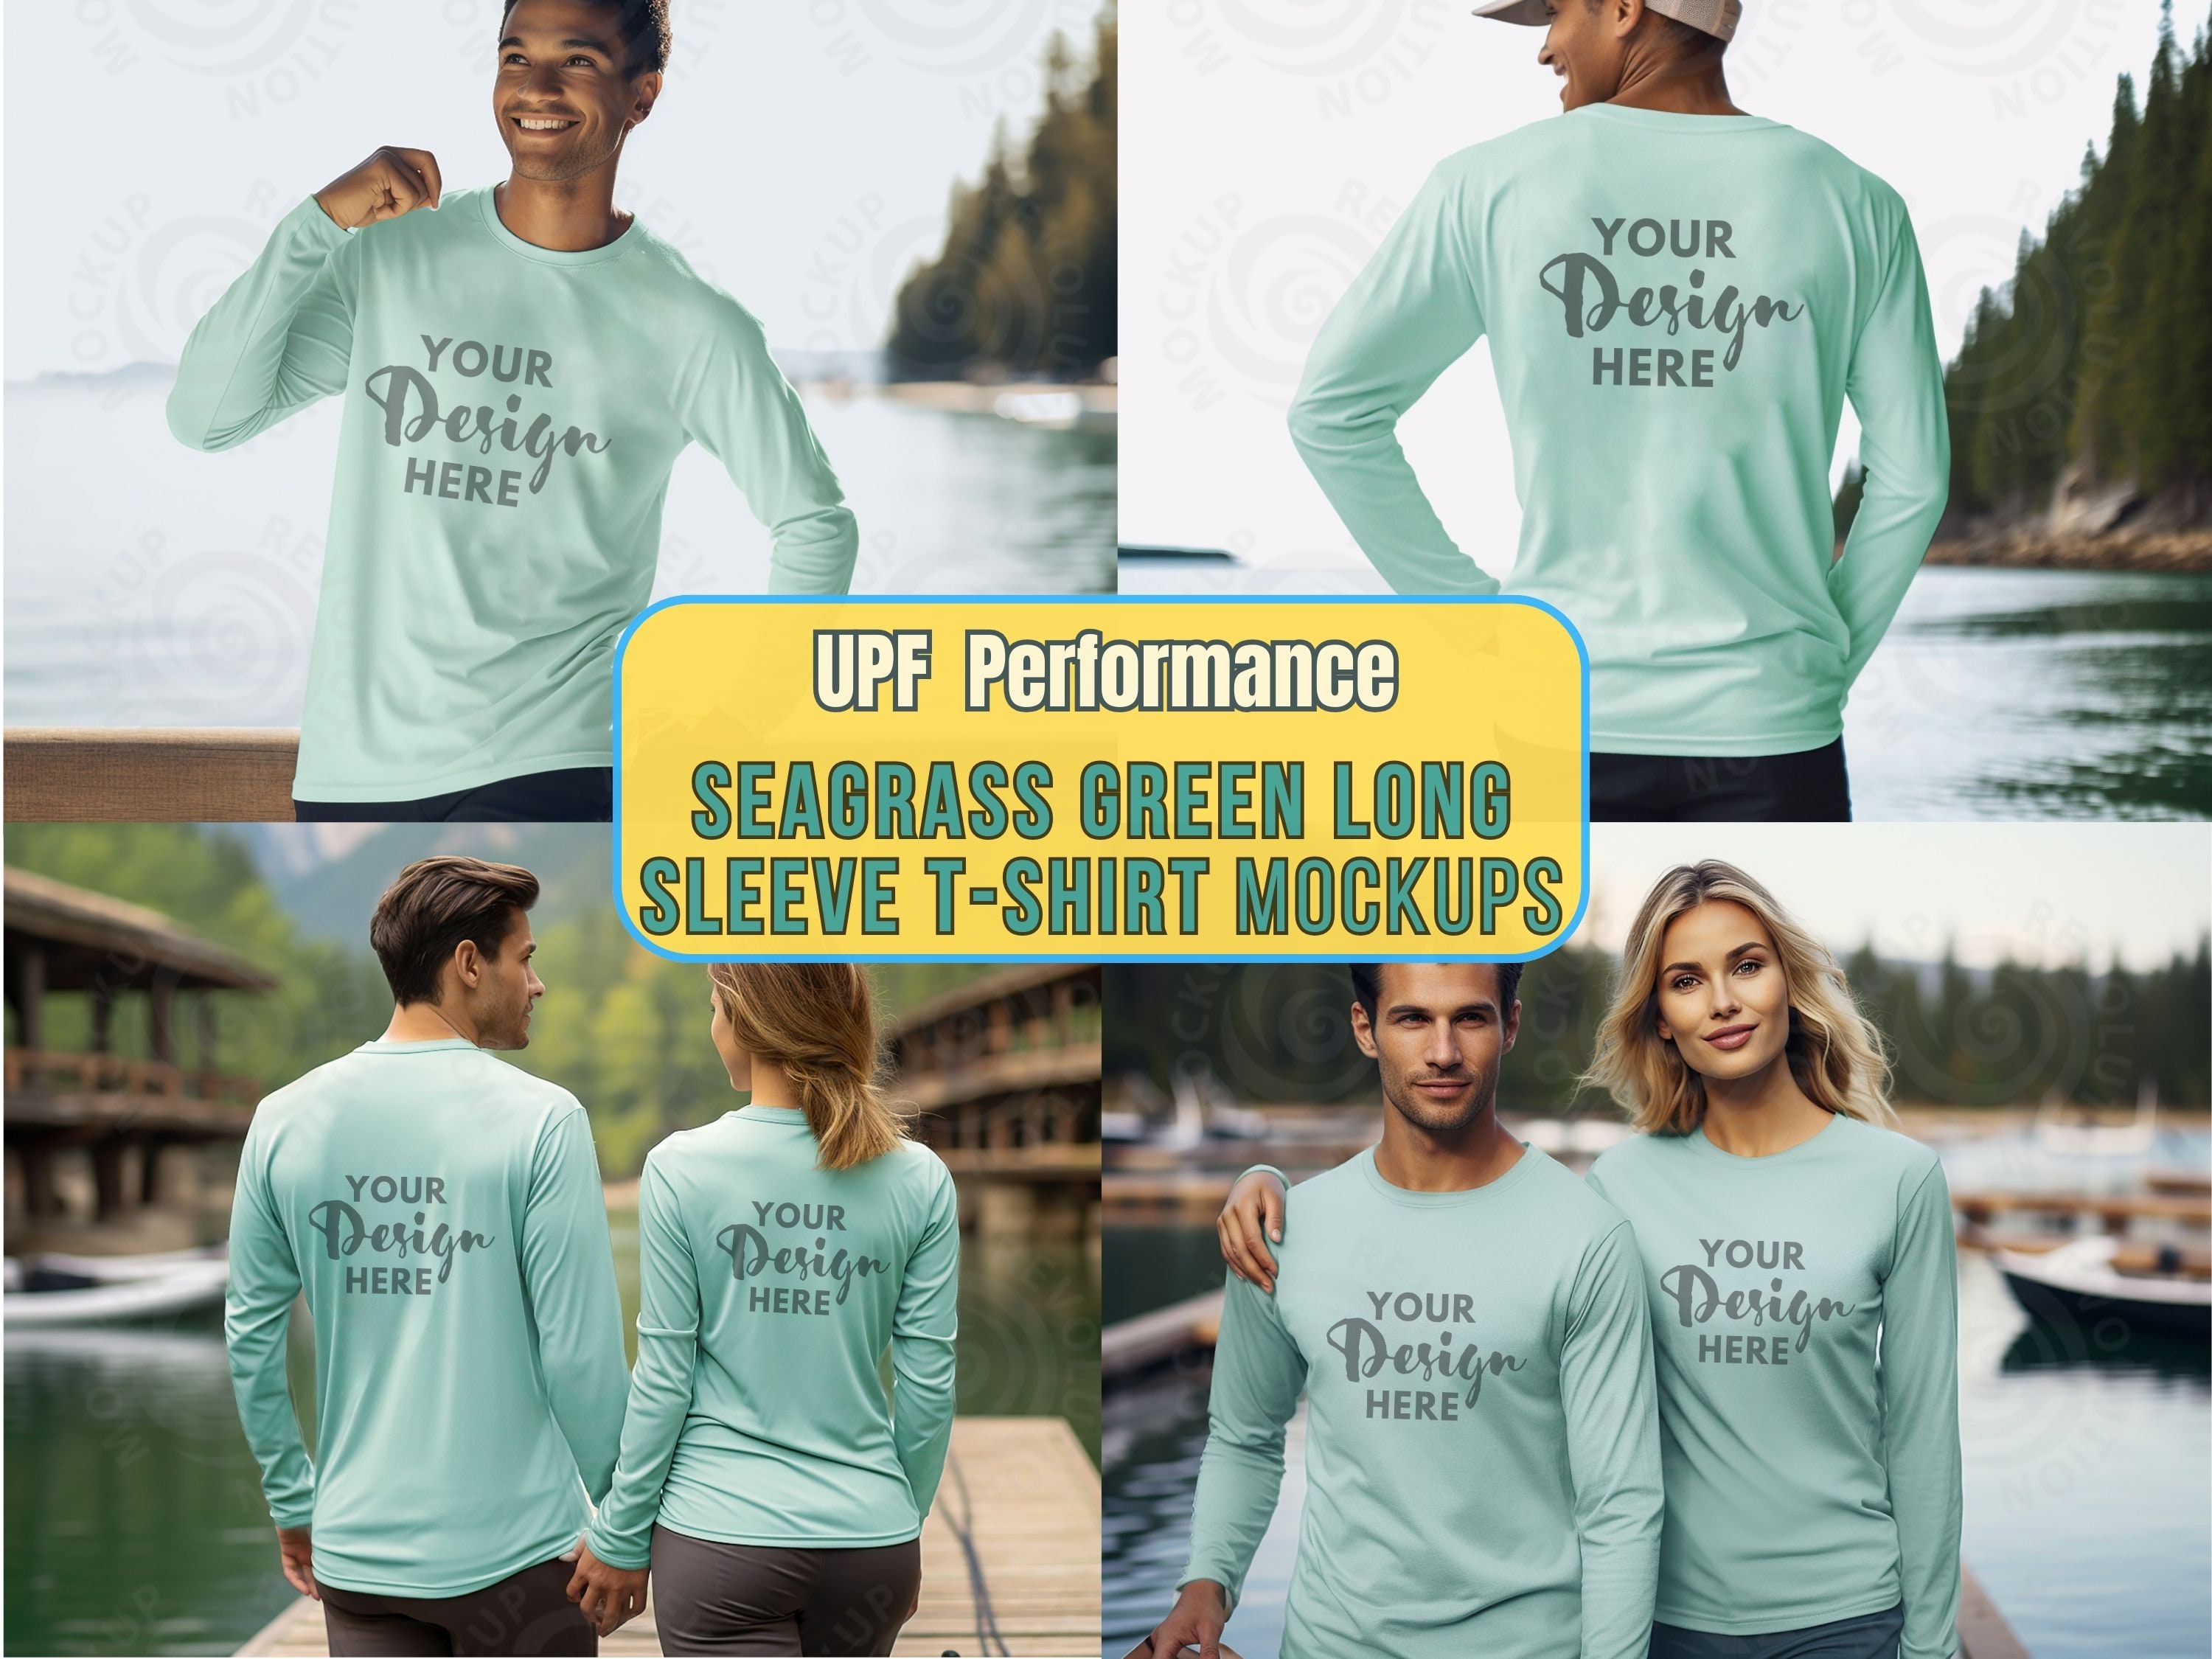 Men Fishing Shirt LS Shirt Fast Dry UPF40 UV Fishing Shirts Sports Fishing  Clothing Breathable Mens Camisa Masculina USA Size